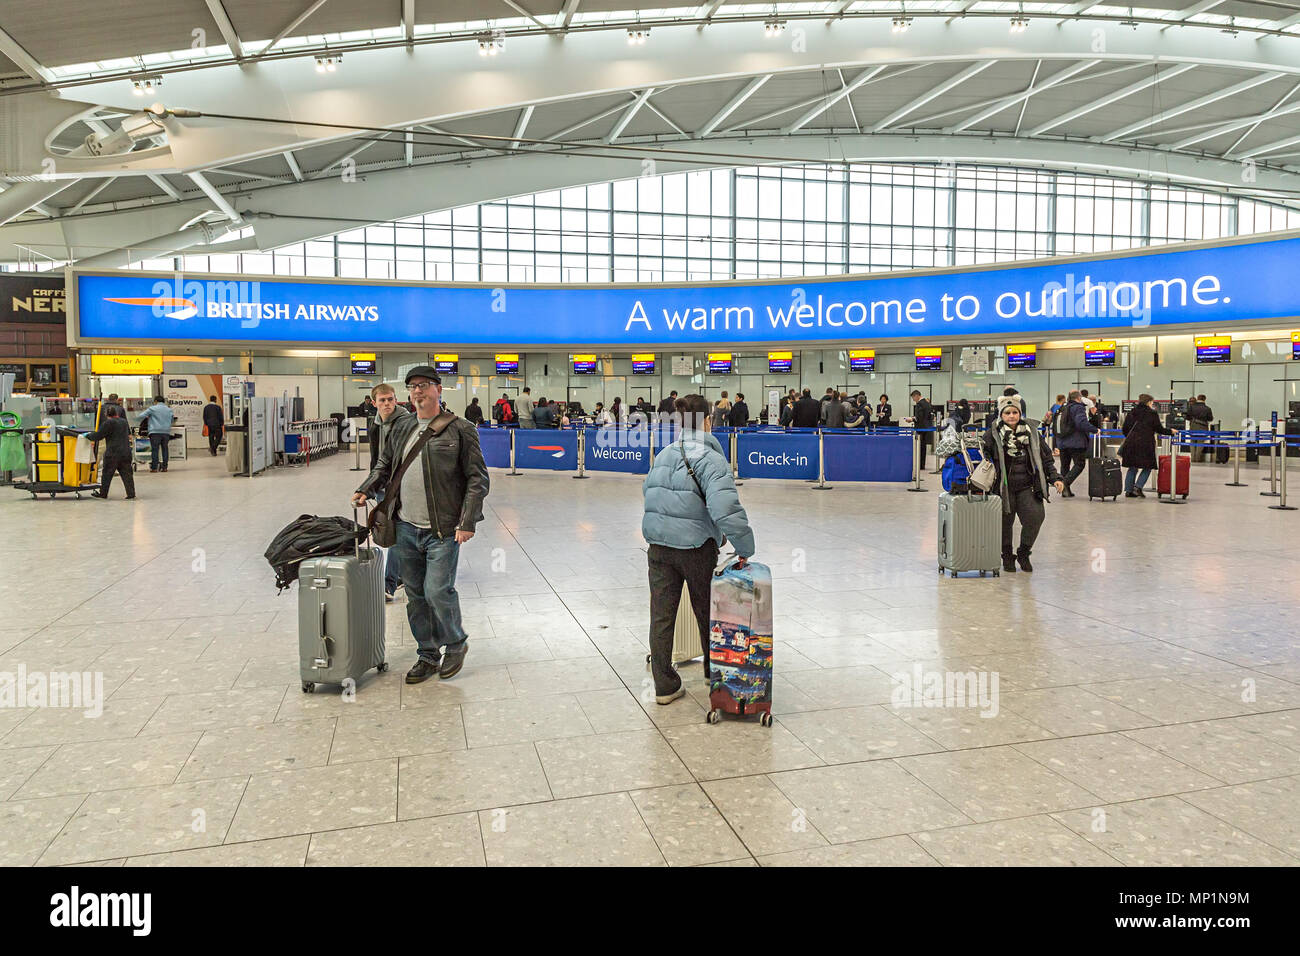 Passengers at check in desks for British Airways, Heathrow airport, London, UK Stock Photo